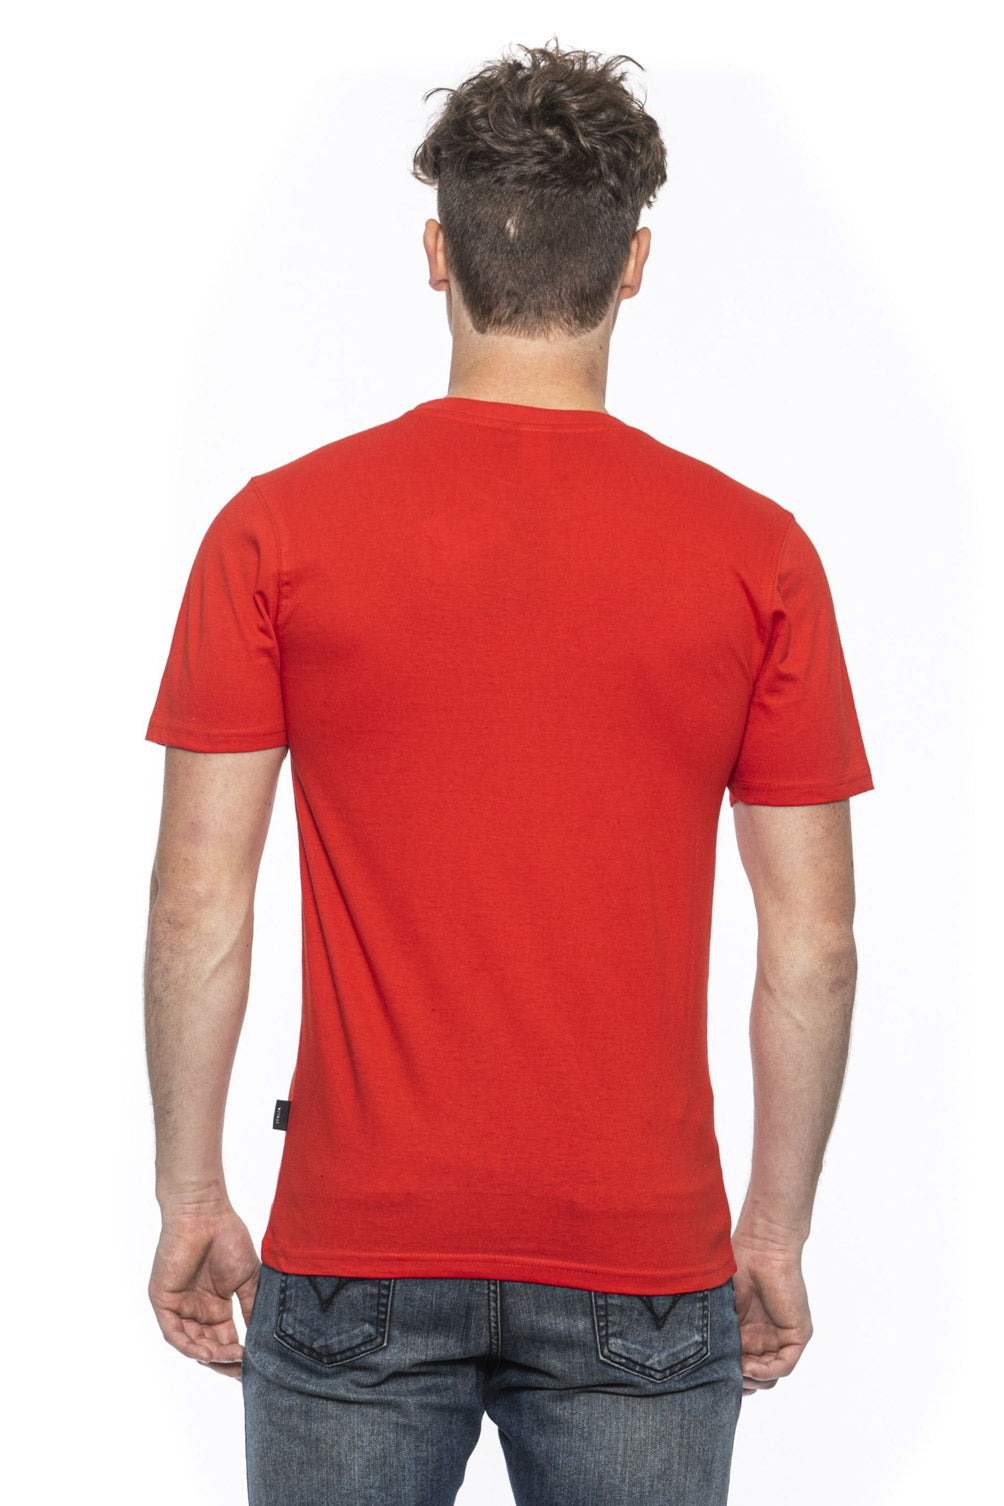 19V69 Italia Mens T-Shirt Red TROY RED